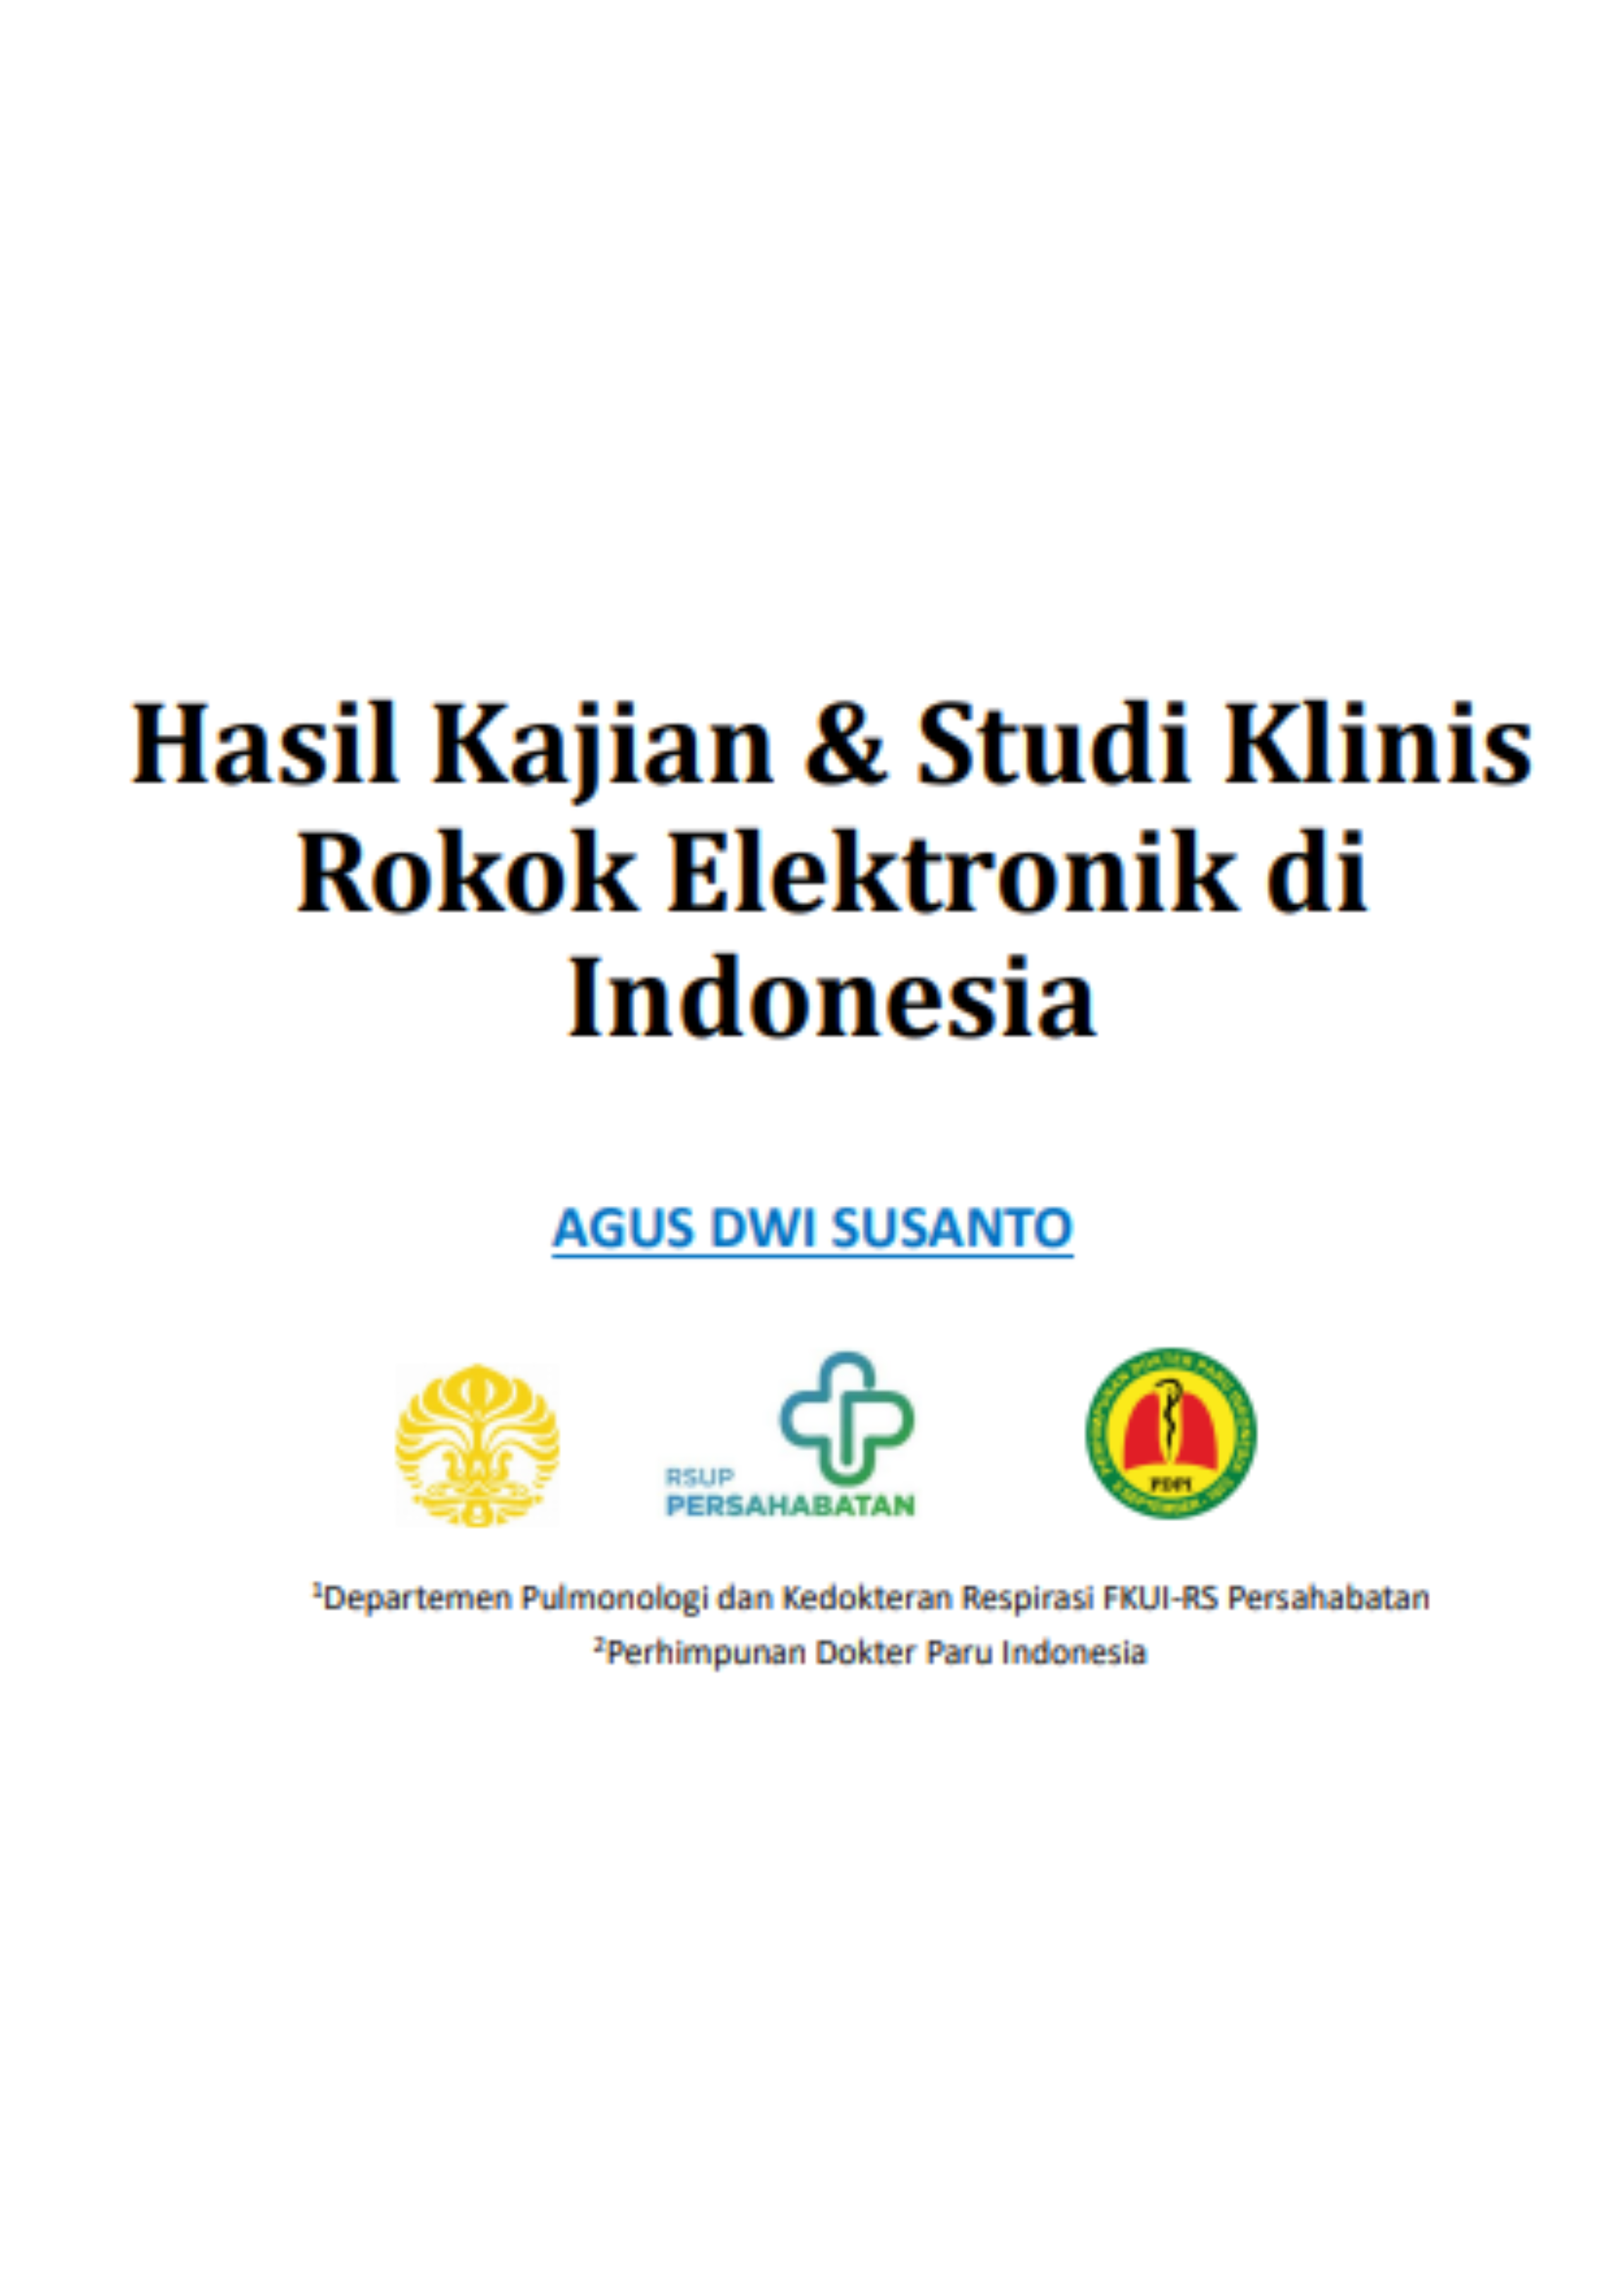 Hasil Kajian & Studi Klinis Rokok Elektronik di Indonnesia